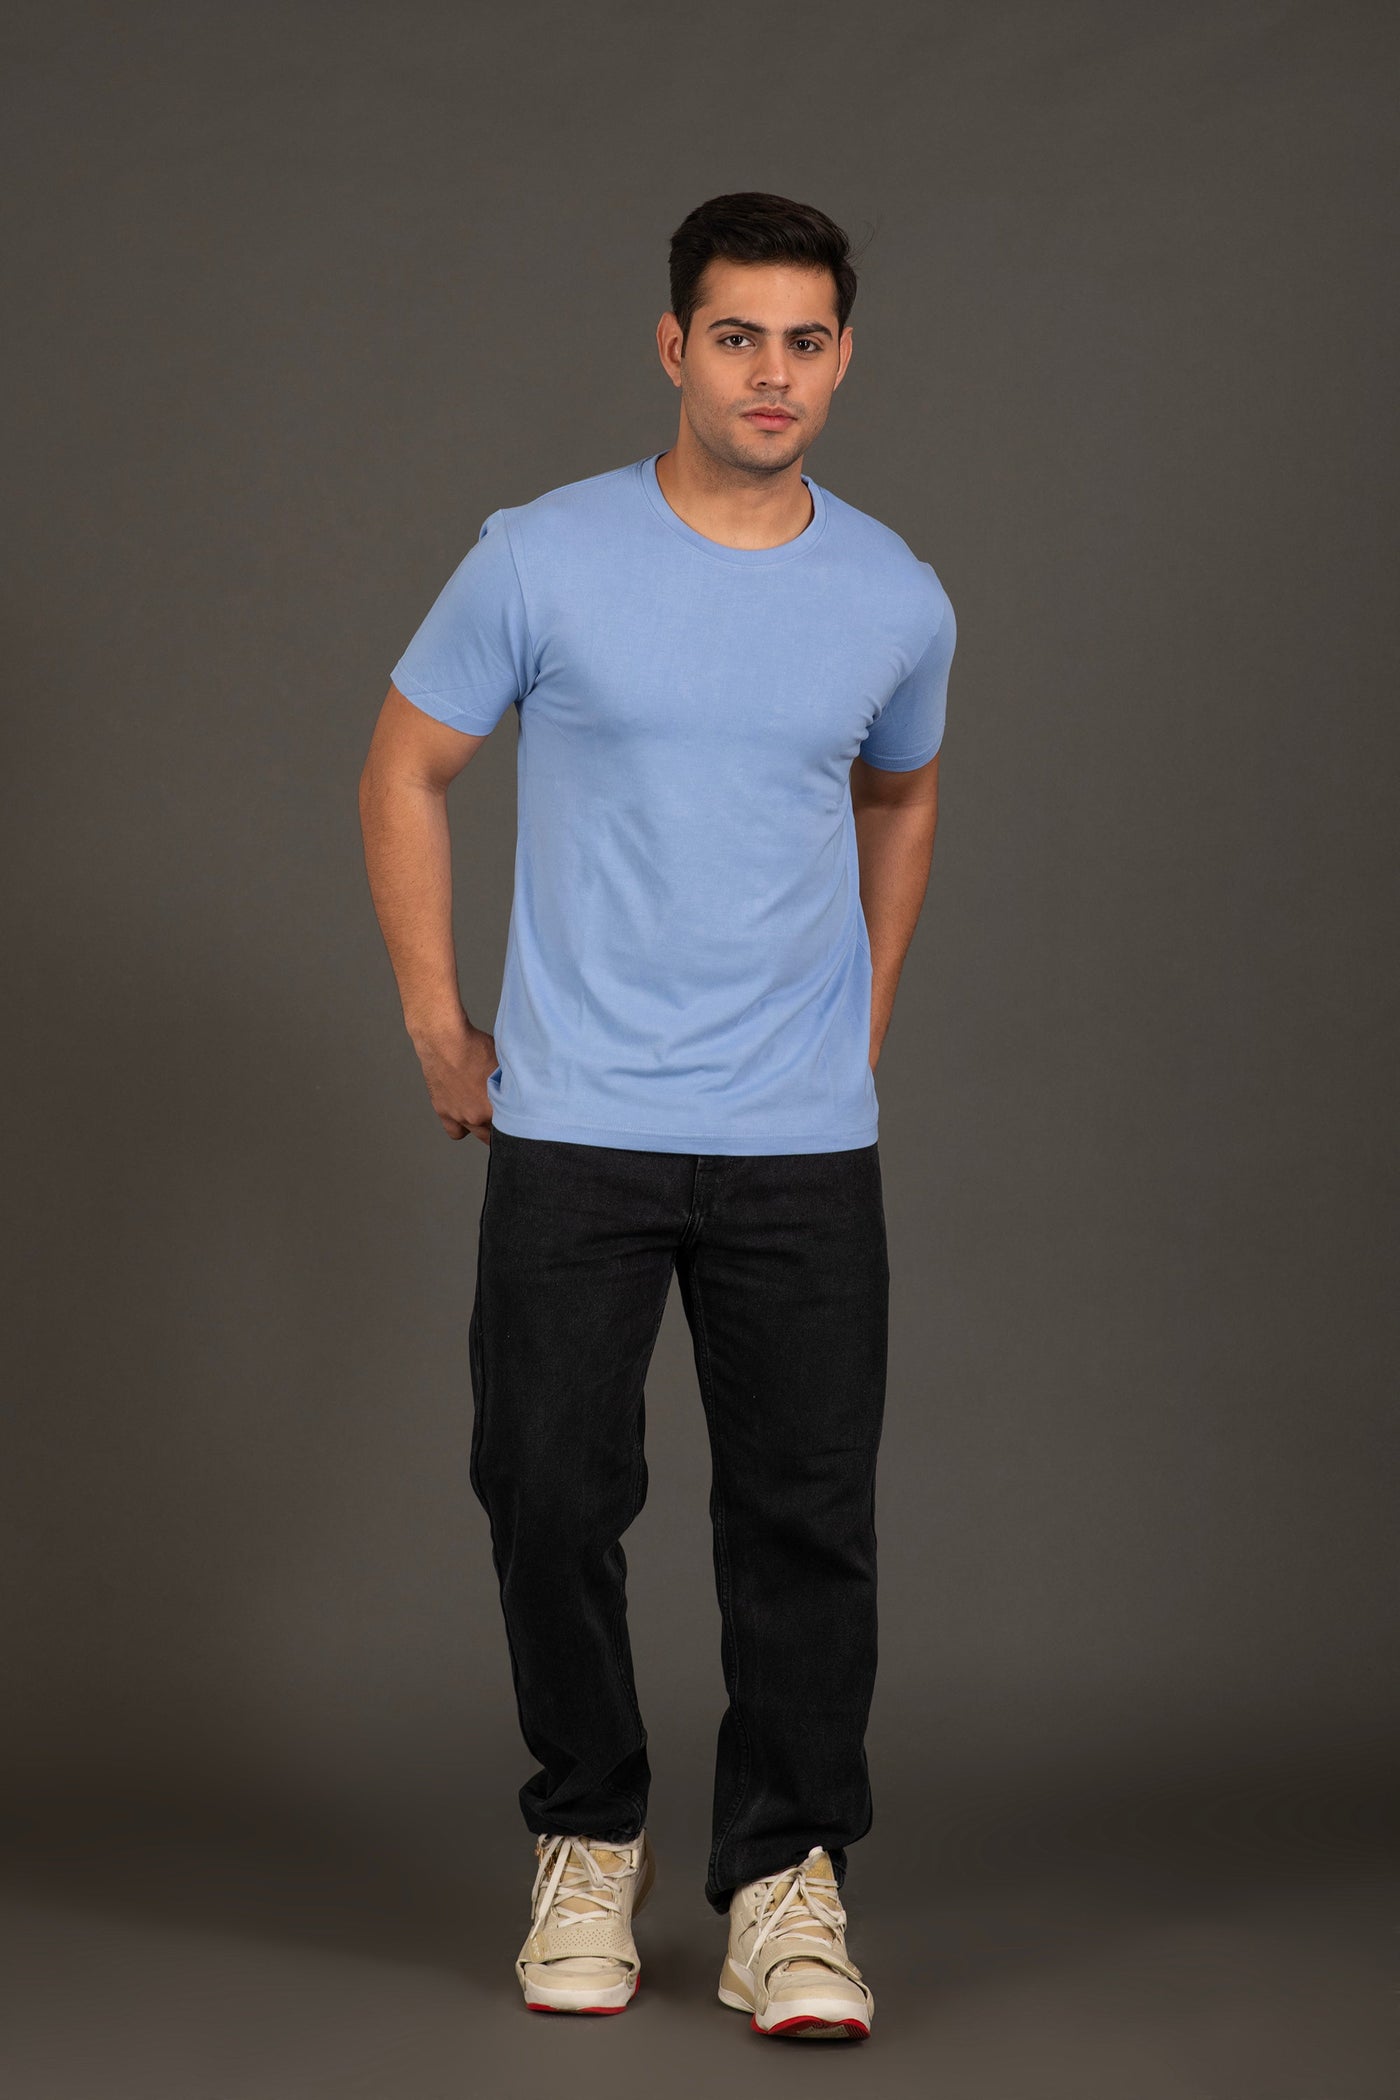 Organic Bamboo Round Neck T-Shirt for Men : Light Blue